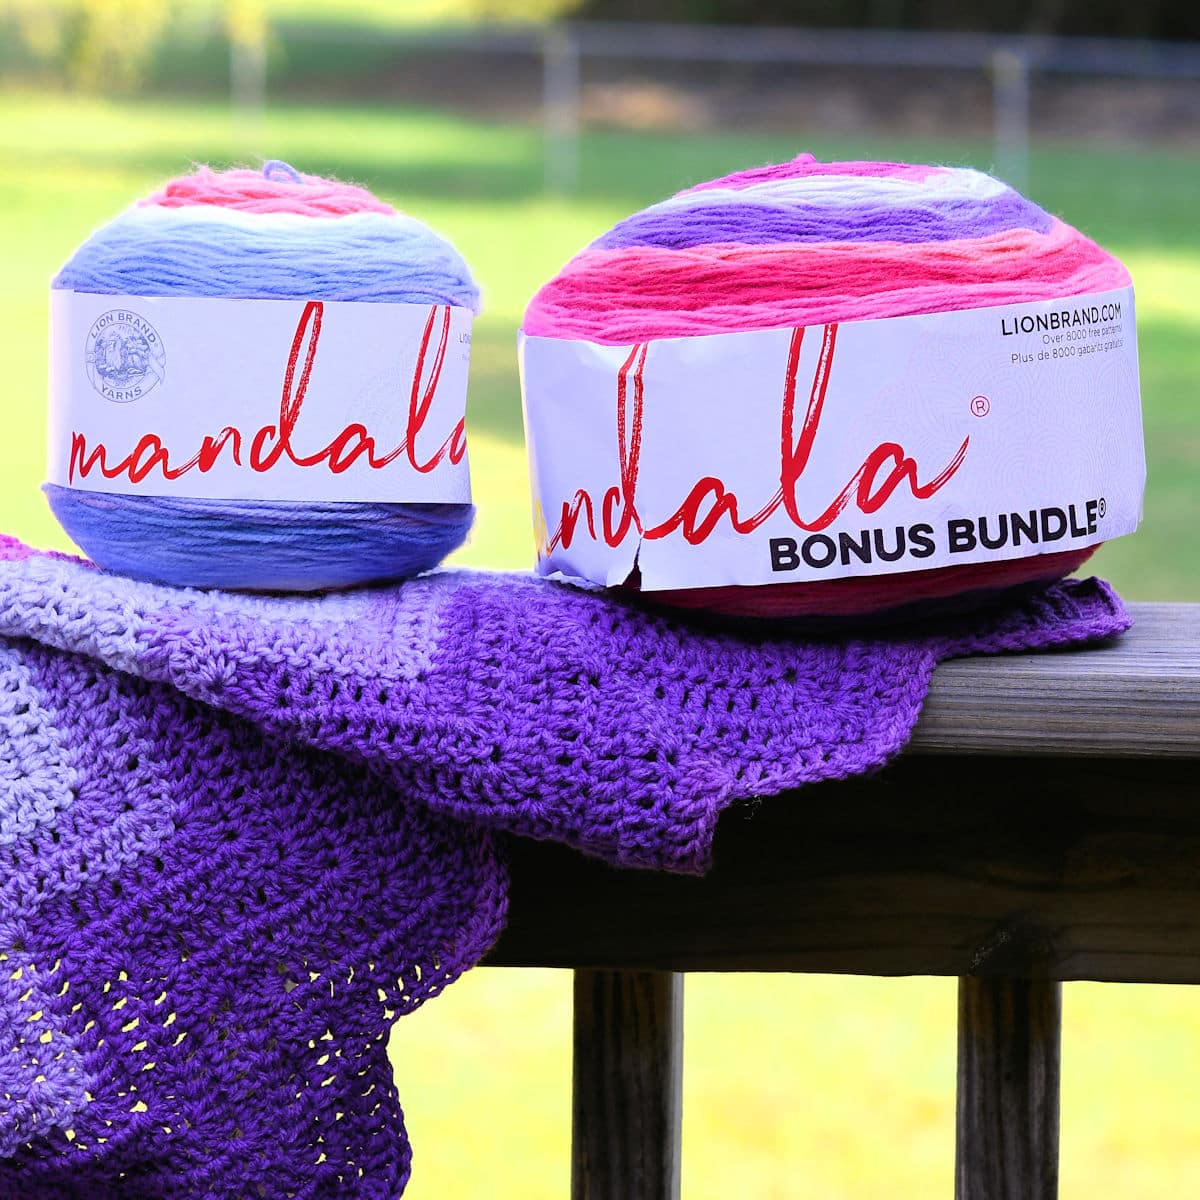 Comparison of Mandala yarn and Mandala Bonus Bundle yarn